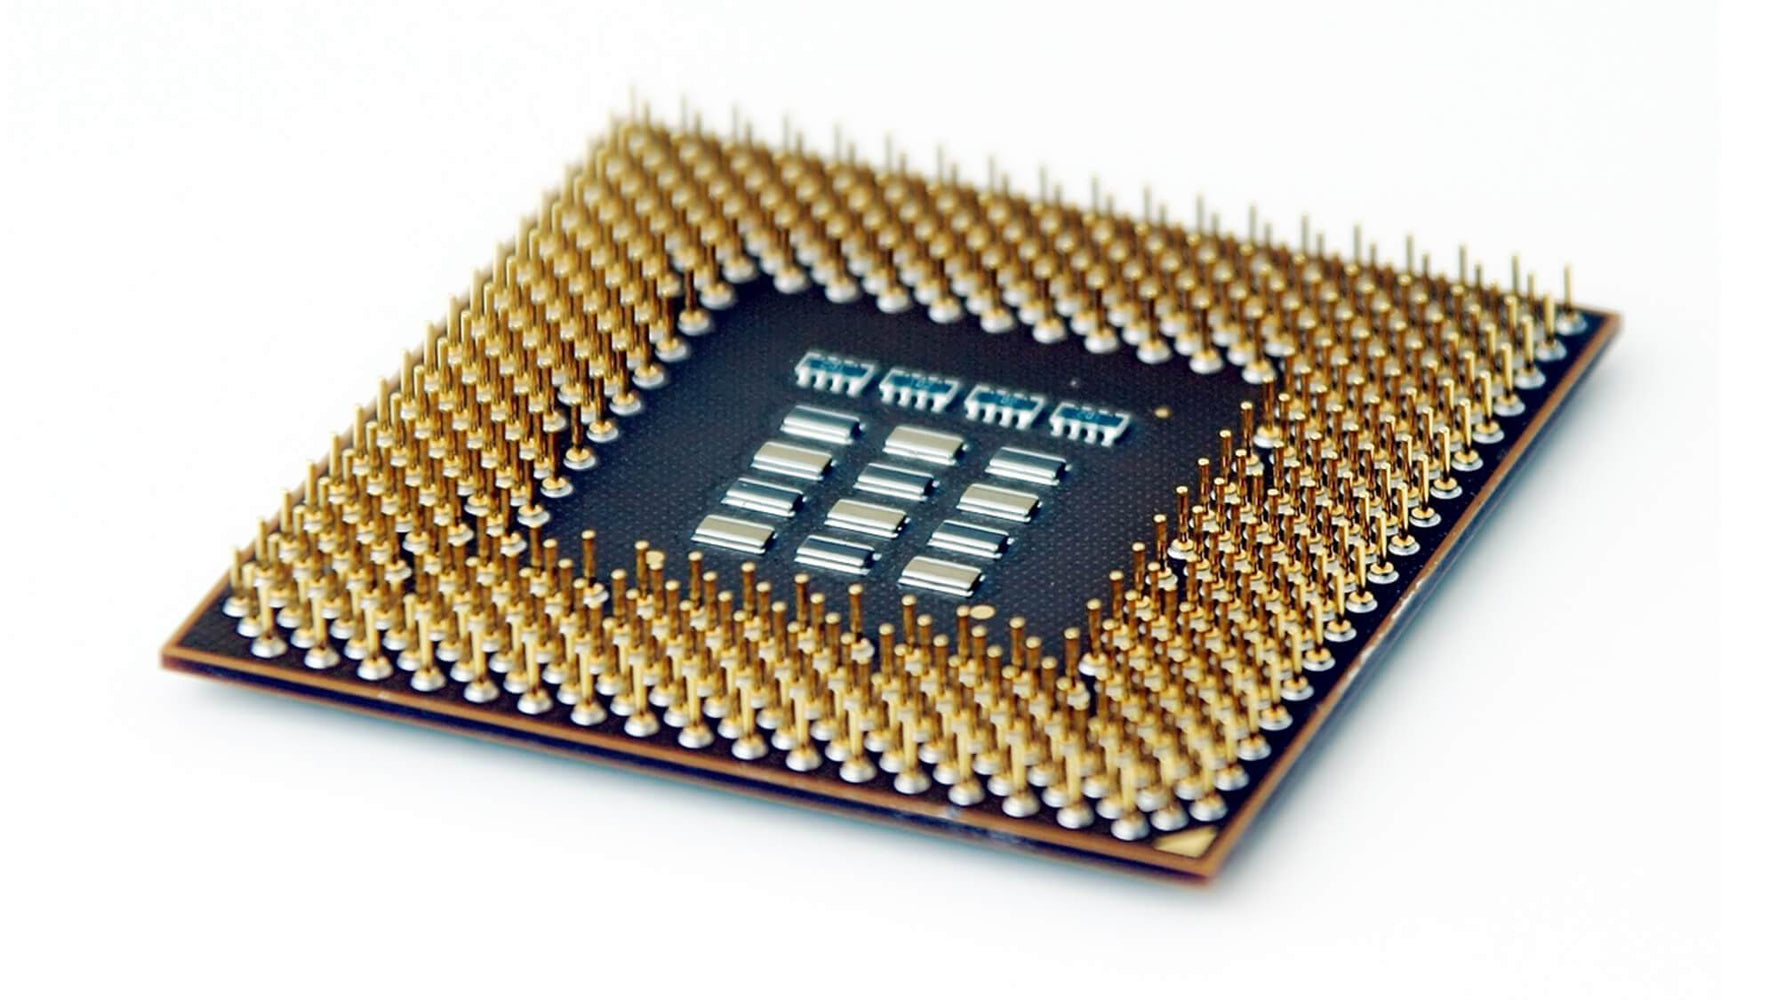 BX80621E54610 - Intel Xeon 6 Core E5-4610 2.4GHz 15MB SMART Cache 7.2GT/S QPI Socket FCLGA-2011 32NM 95W Processor